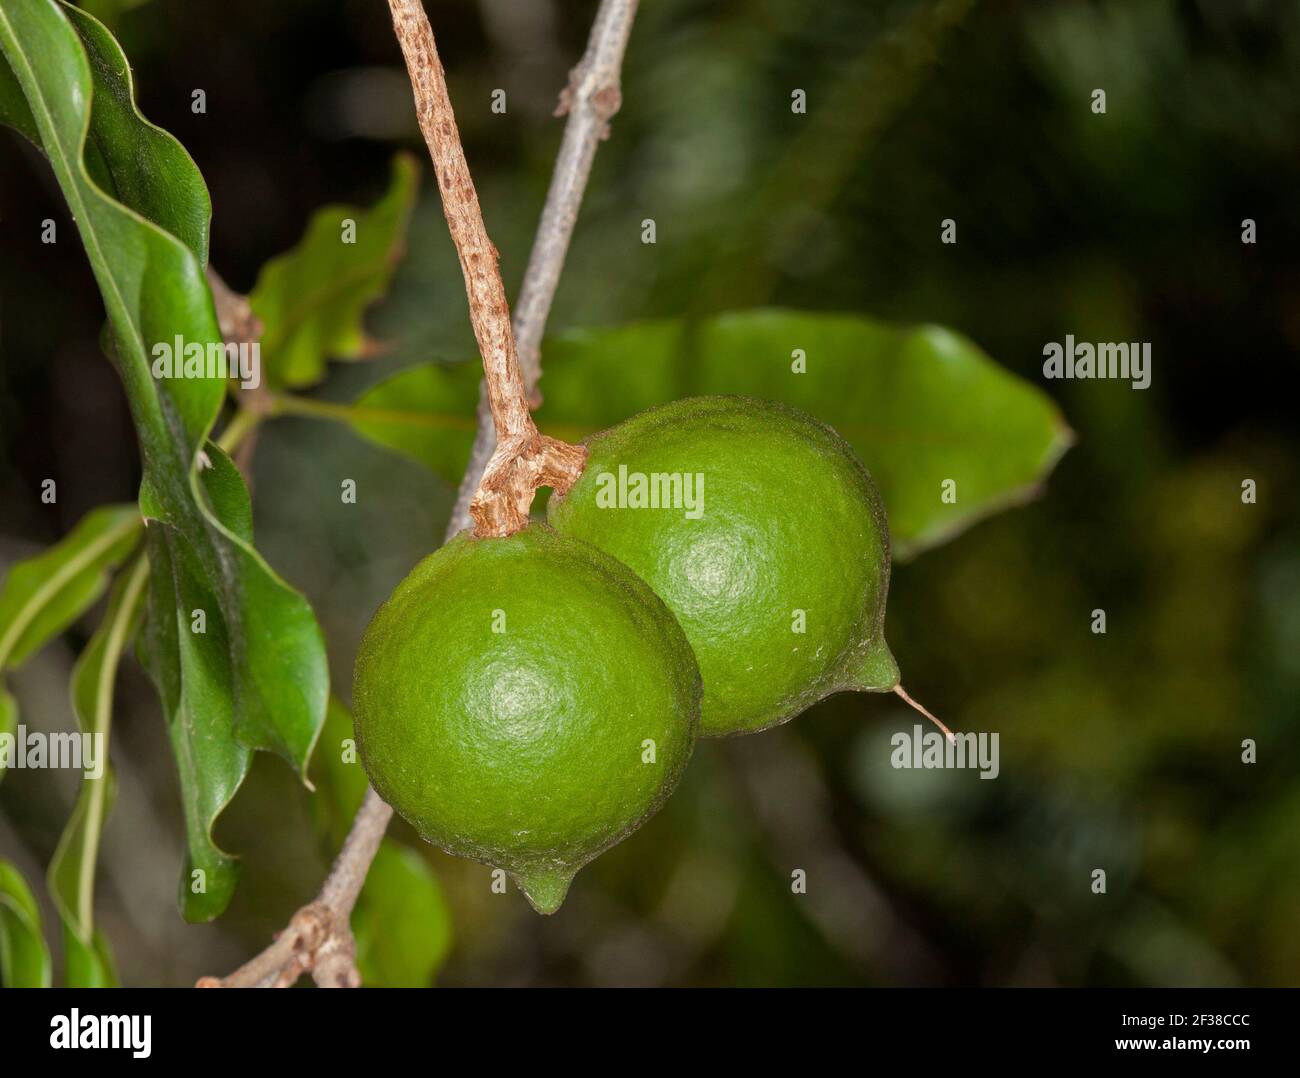 Macadamia nuts growing against background of green leaves of Australian native tree, Macadamia integrifolia Stock Photo